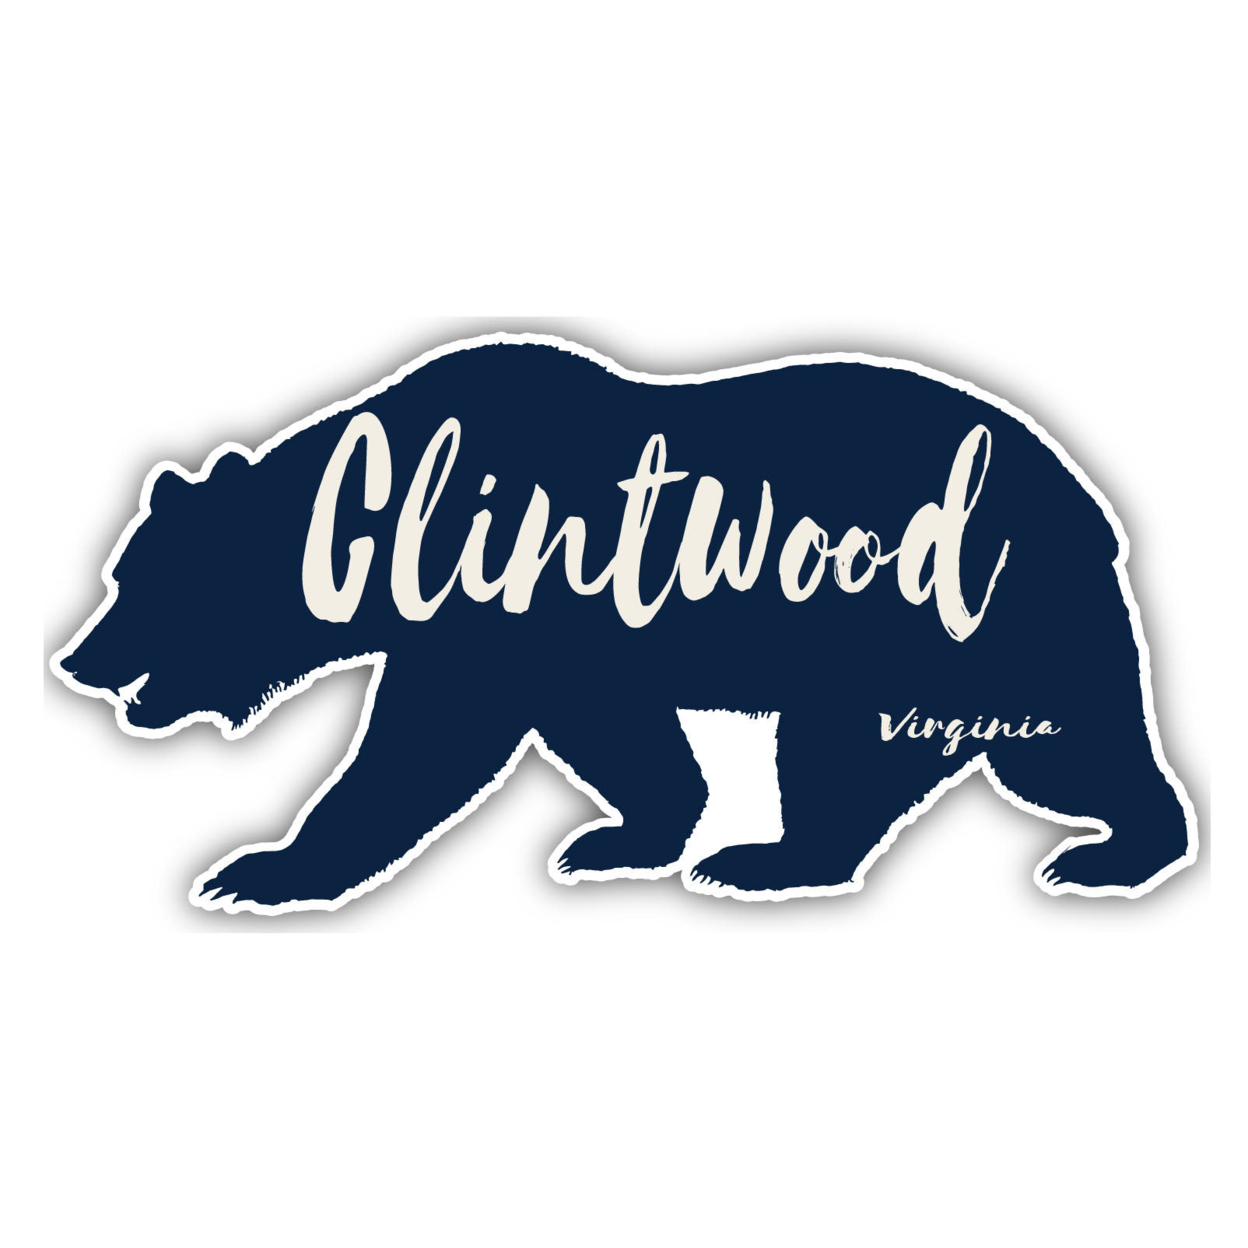 Clintwood Virginia Souvenir Decorative Stickers (Choose Theme And Size) - Single Unit, 10-Inch, Bear